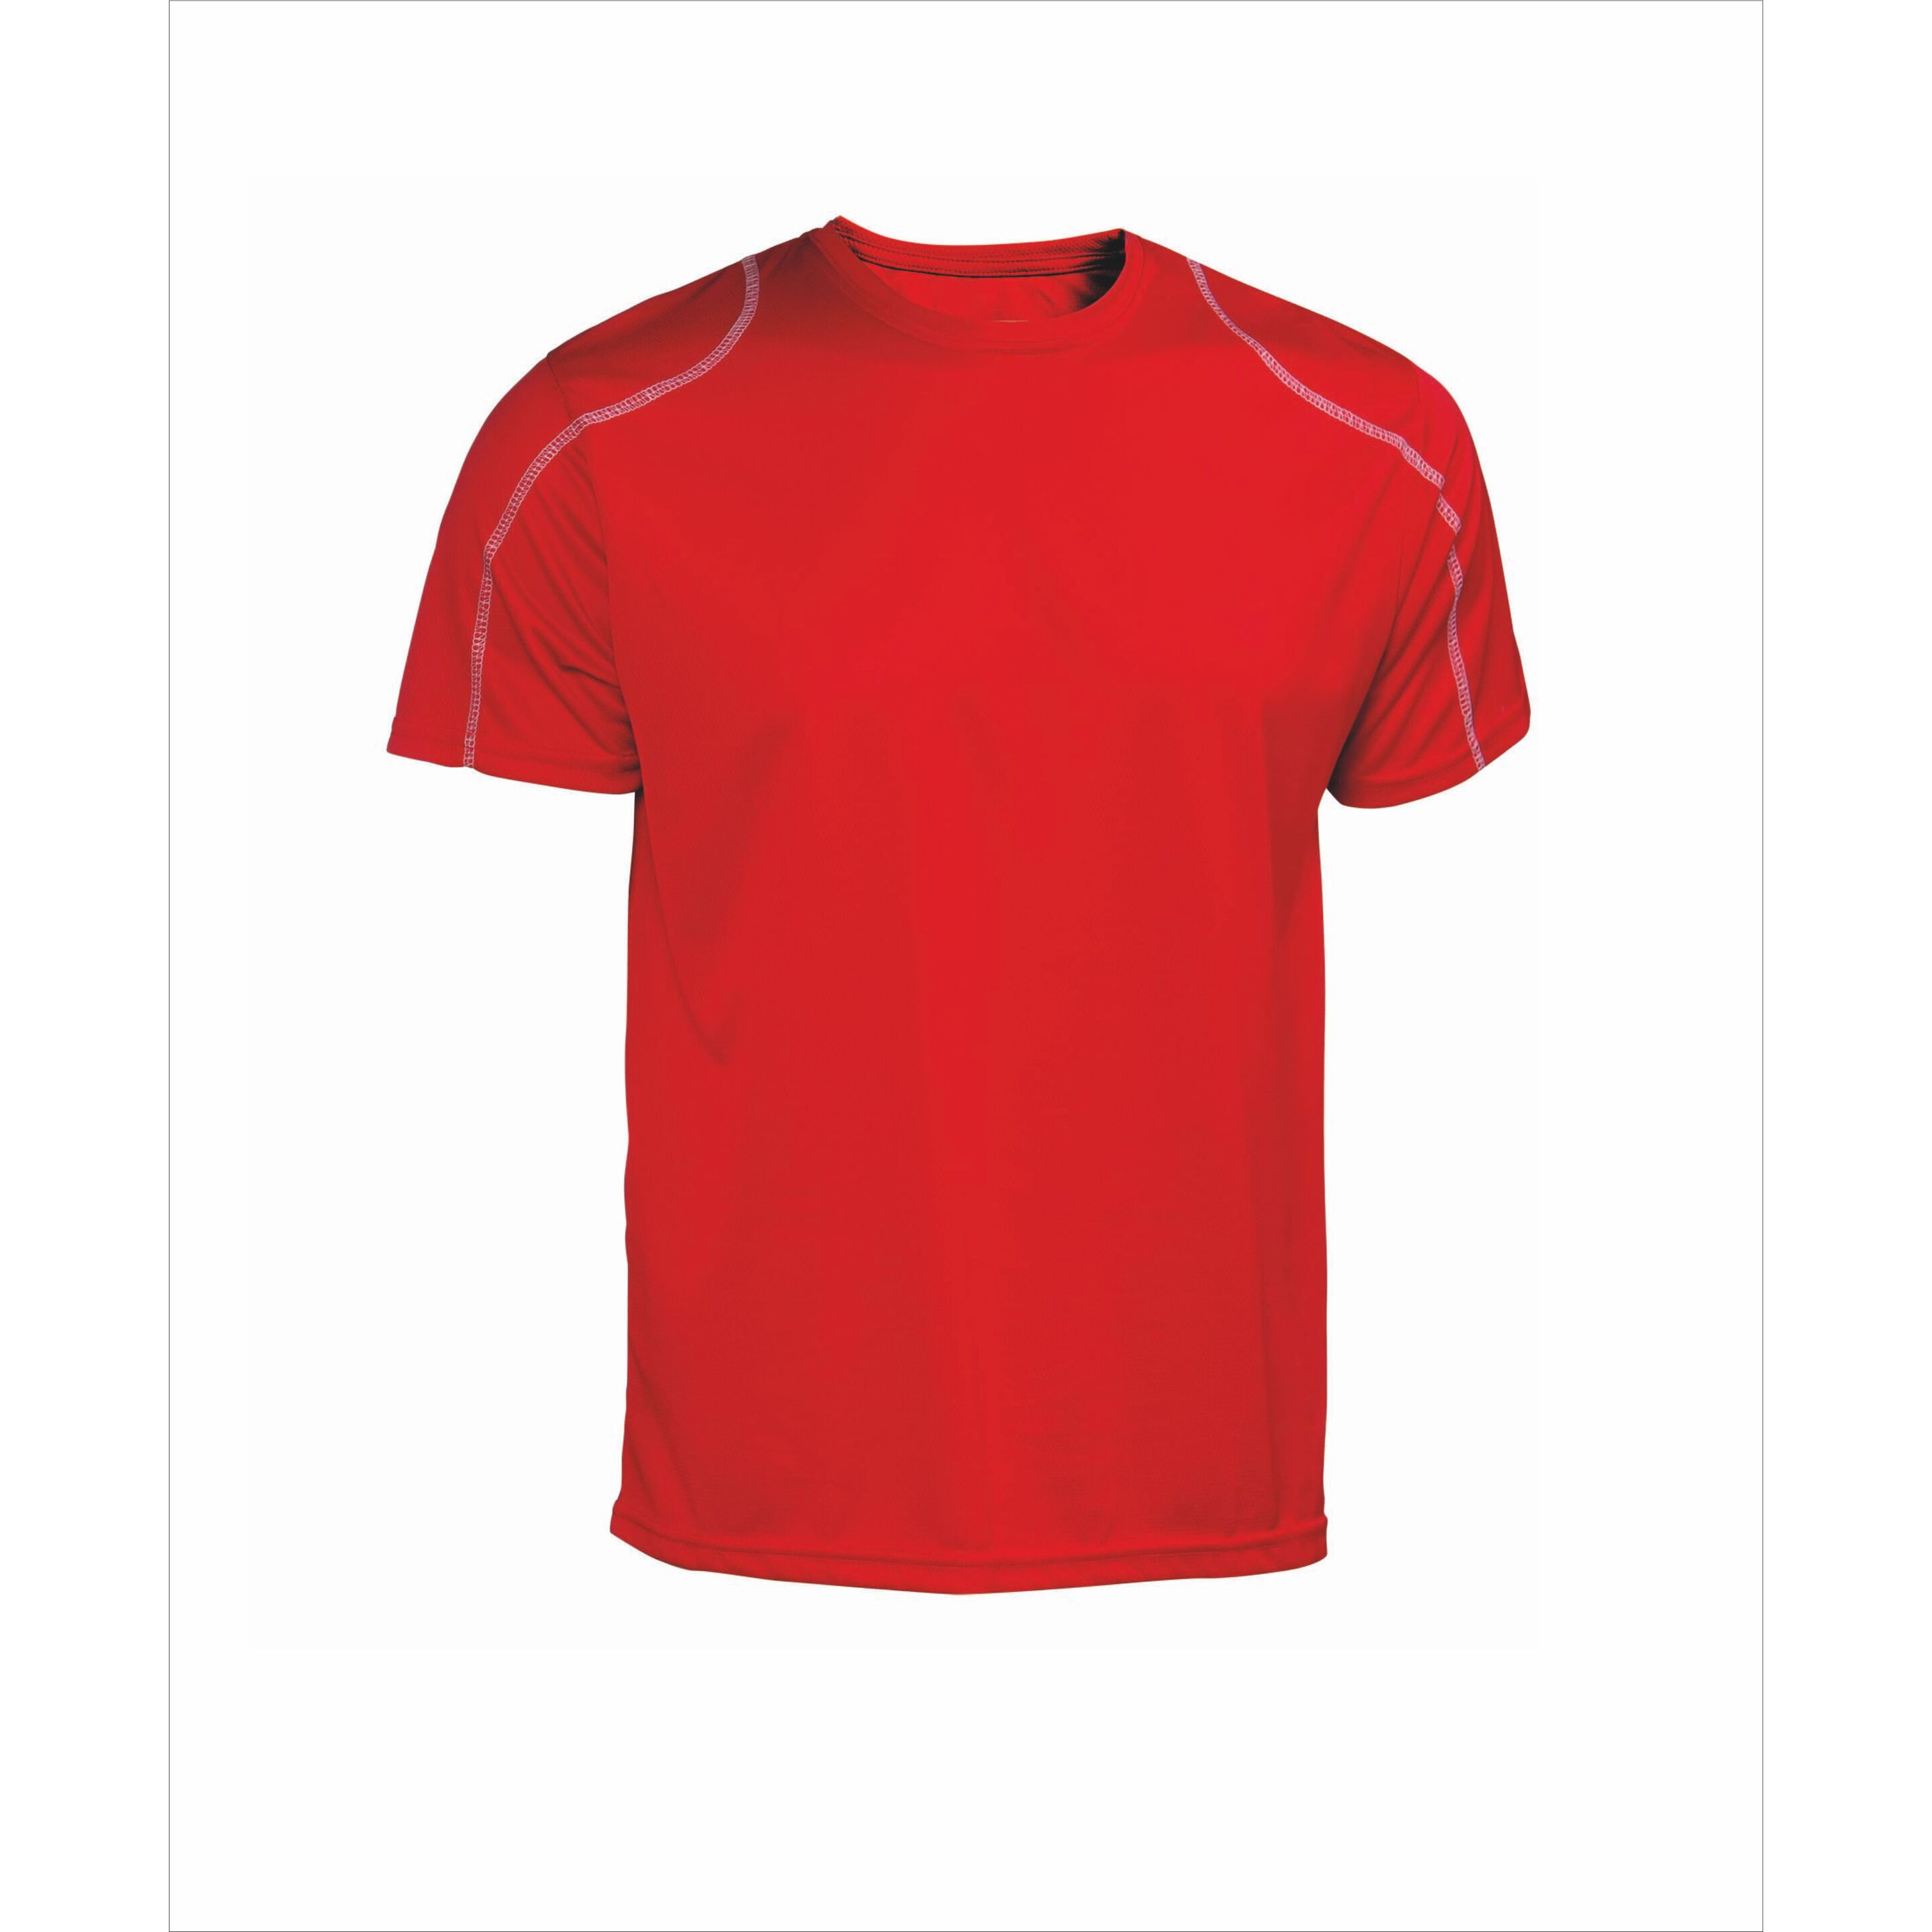 Camiseta Running Modelo Río Asioka - rojo - Camiseta Correr Manga Corta  MKP